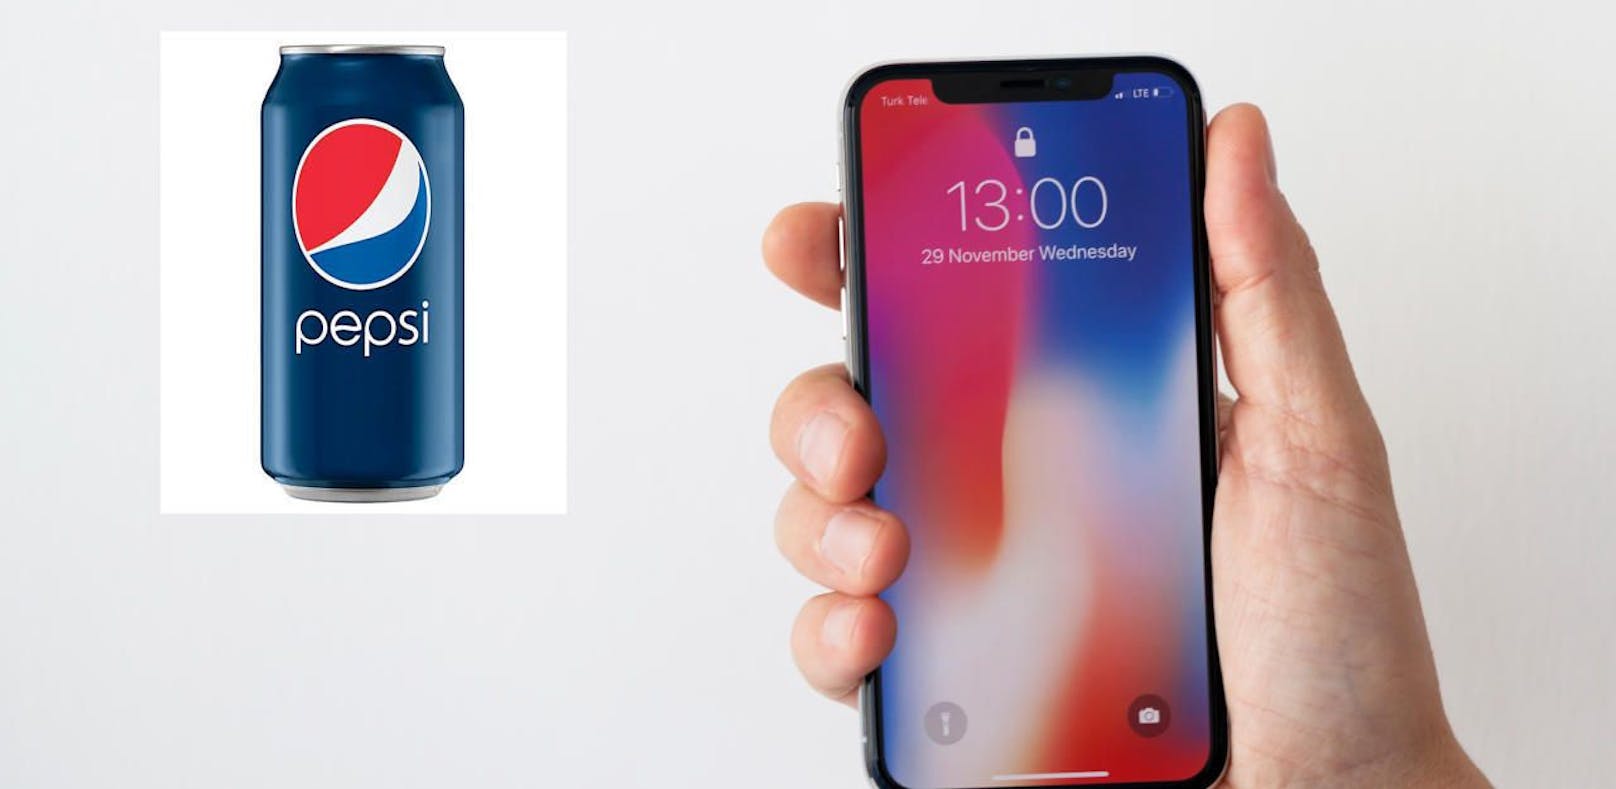 Statt teurem Smartphone kam nur Pepsi-Dose.